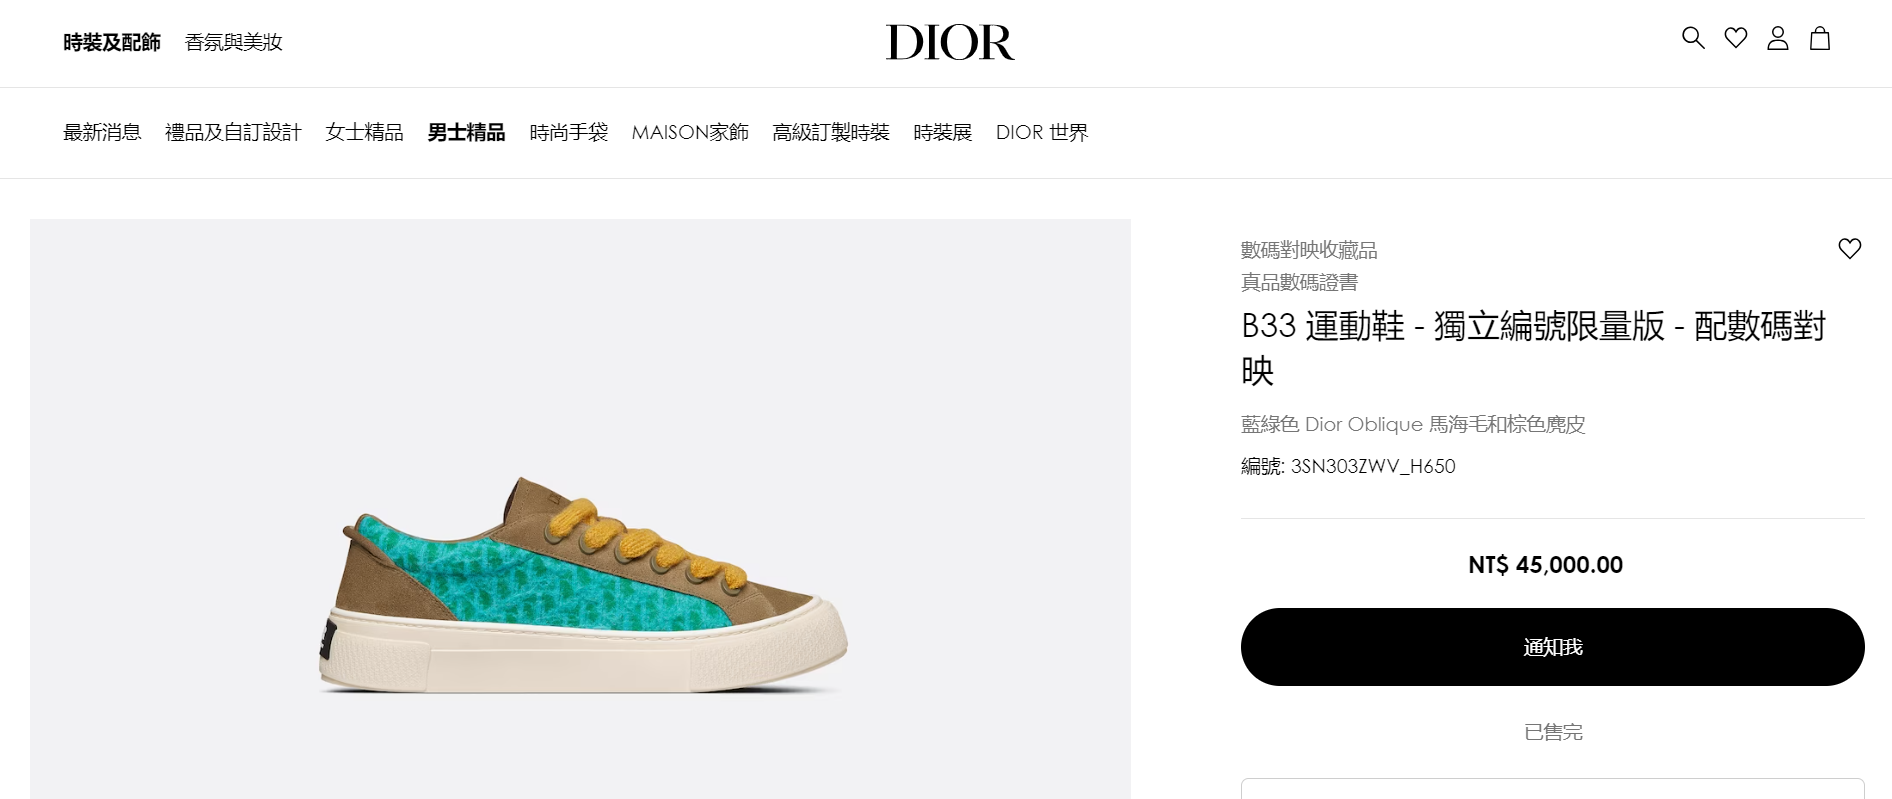 Dior 球鞋綁 NFT，搶占 Web3 市場